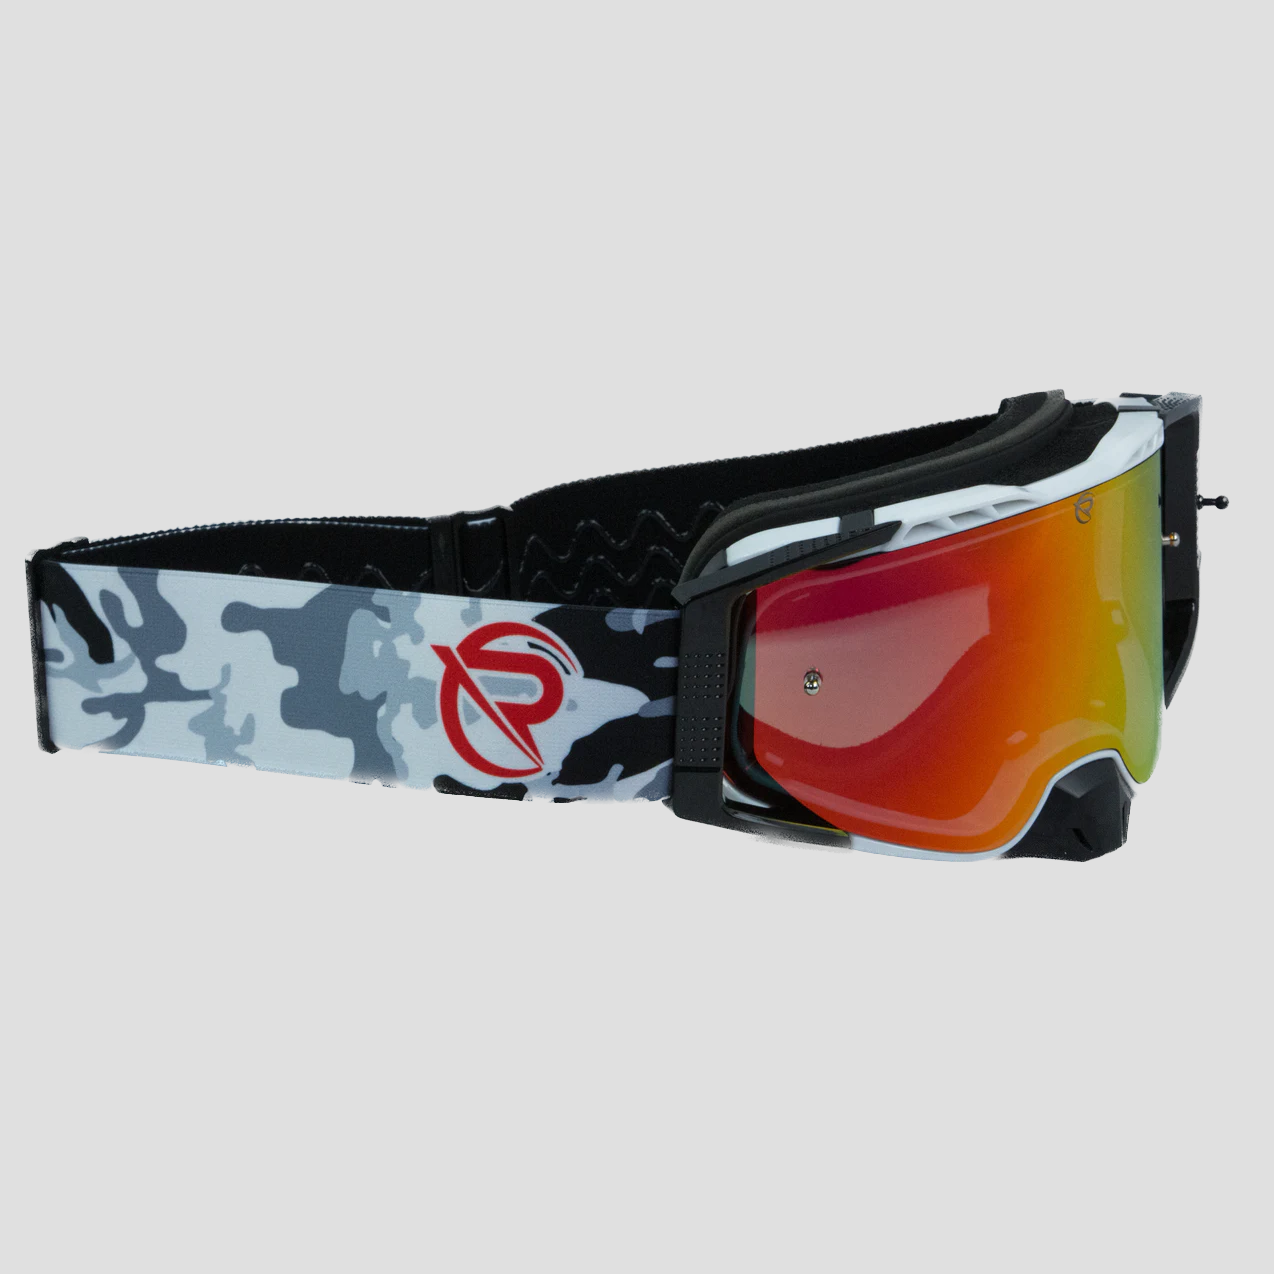 Defiant Pro Motocross Goggle - White Camo - Premium Motocross Goggle from Rebel Optics - Just $84.99! Shop now at Rebel Optics